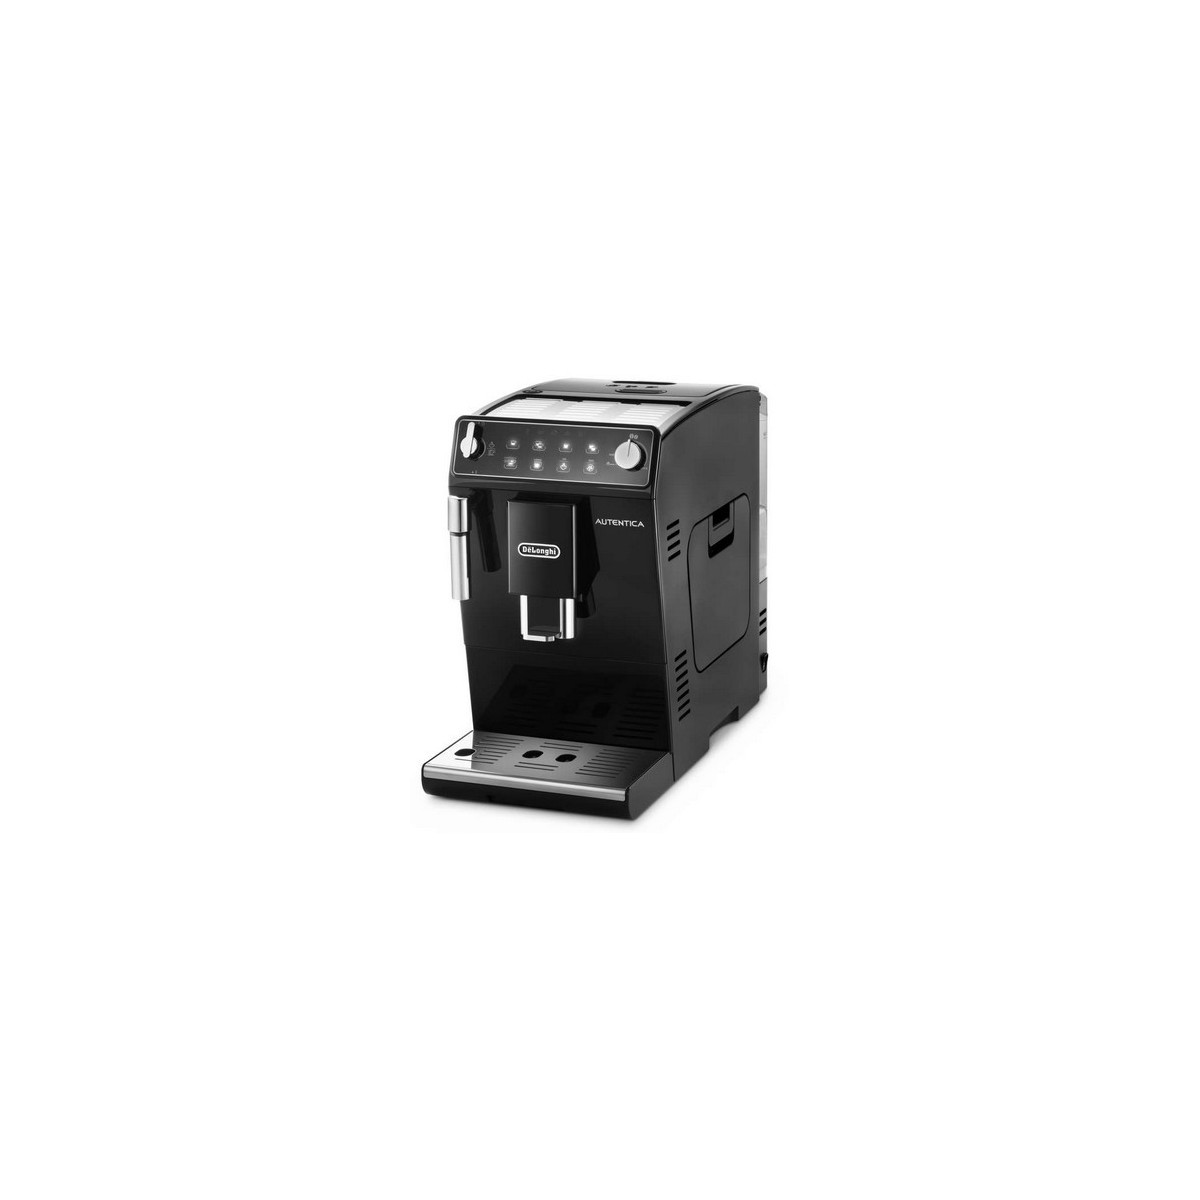 De Longhi Autentica - Espresso machine - Coffee beans,Ground coffee - Built-in grinder - 1450 W - Black